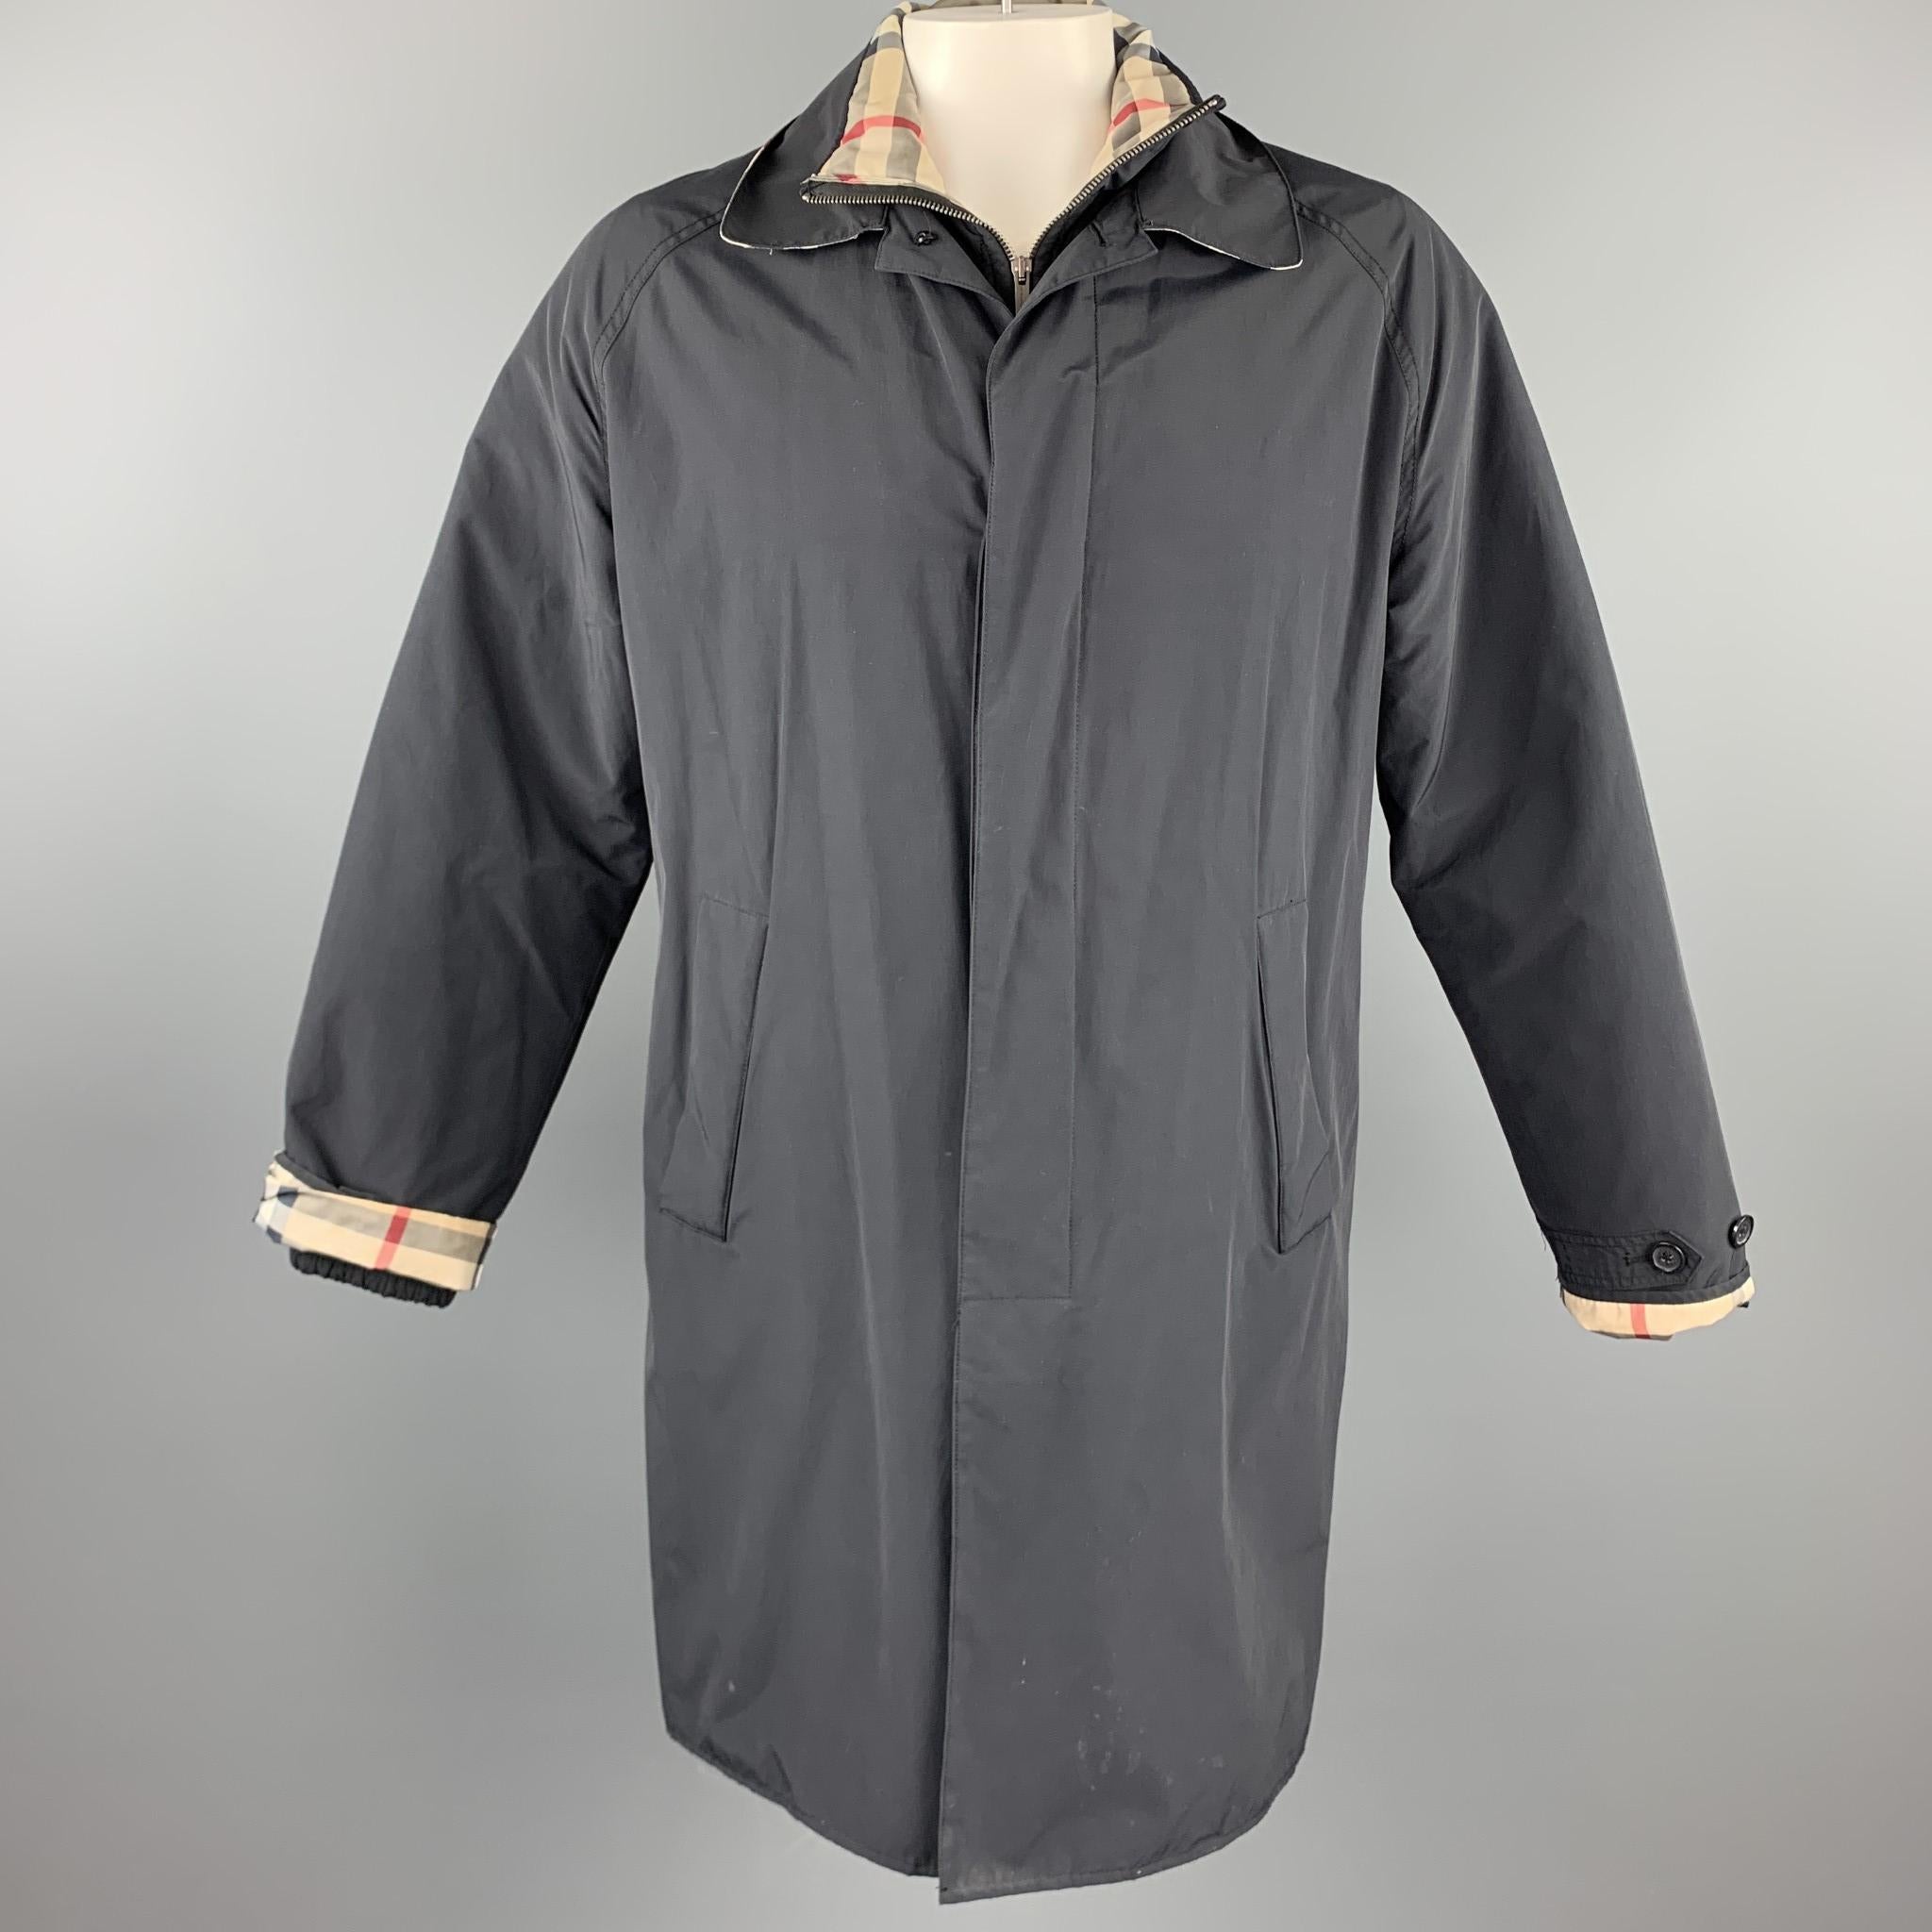 Gray BURBERRY LONDON Size M Navy Nylon / Cotton Zip & Buttons Detachable Jacket Coat